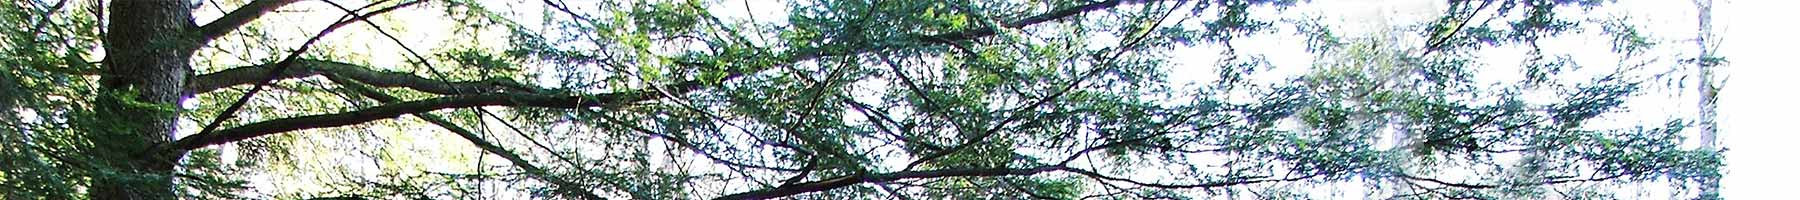 hemlock treebranch